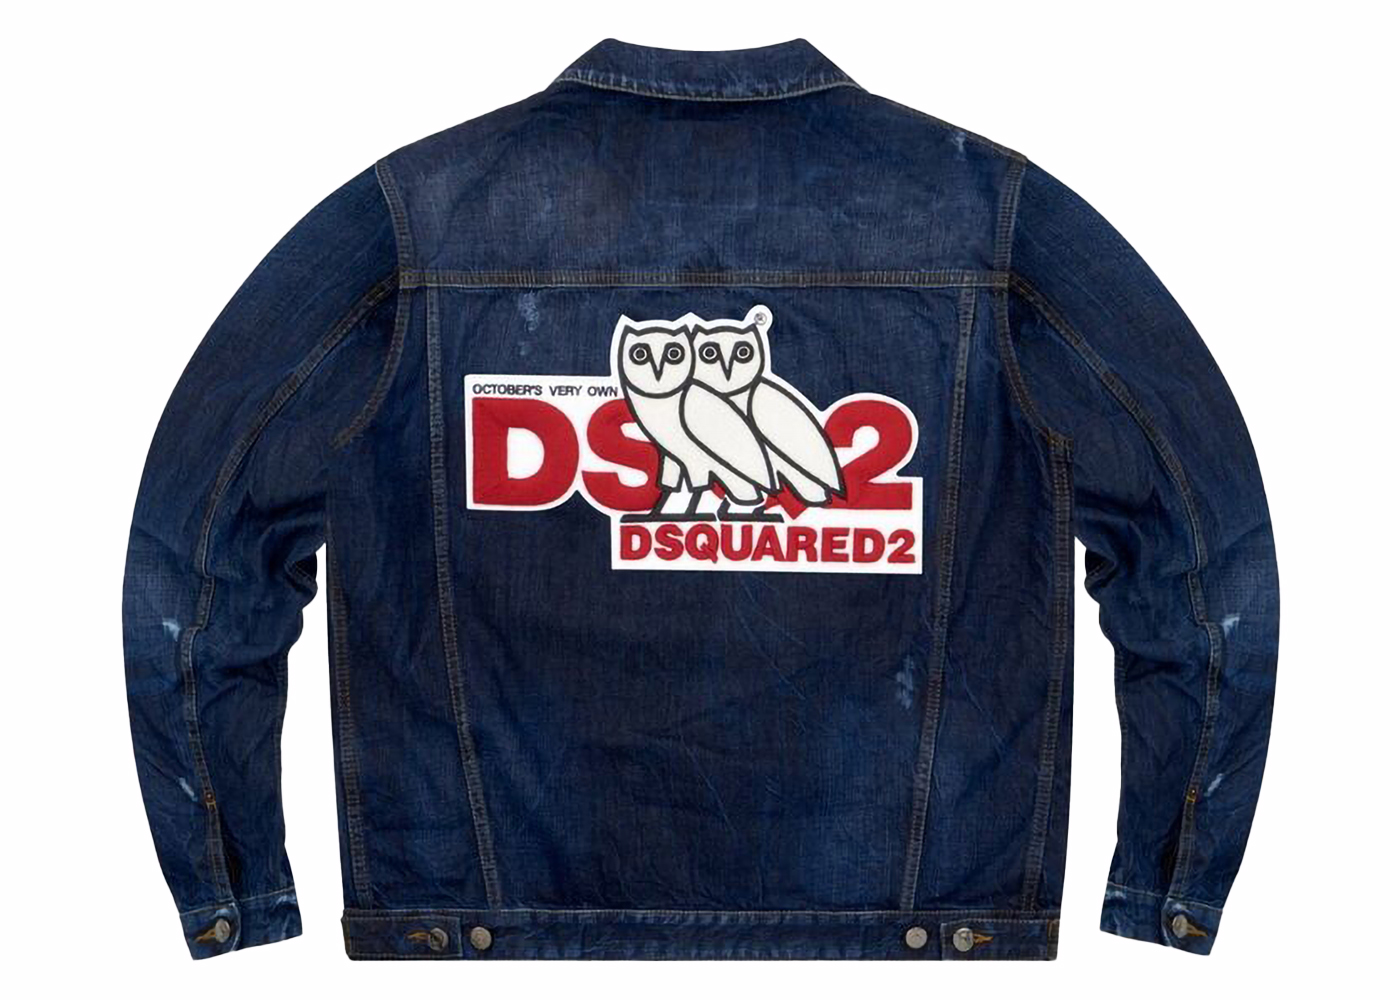 DSQUARED2 mixed material denim jacket | Denim jacket, Jackets, Denim